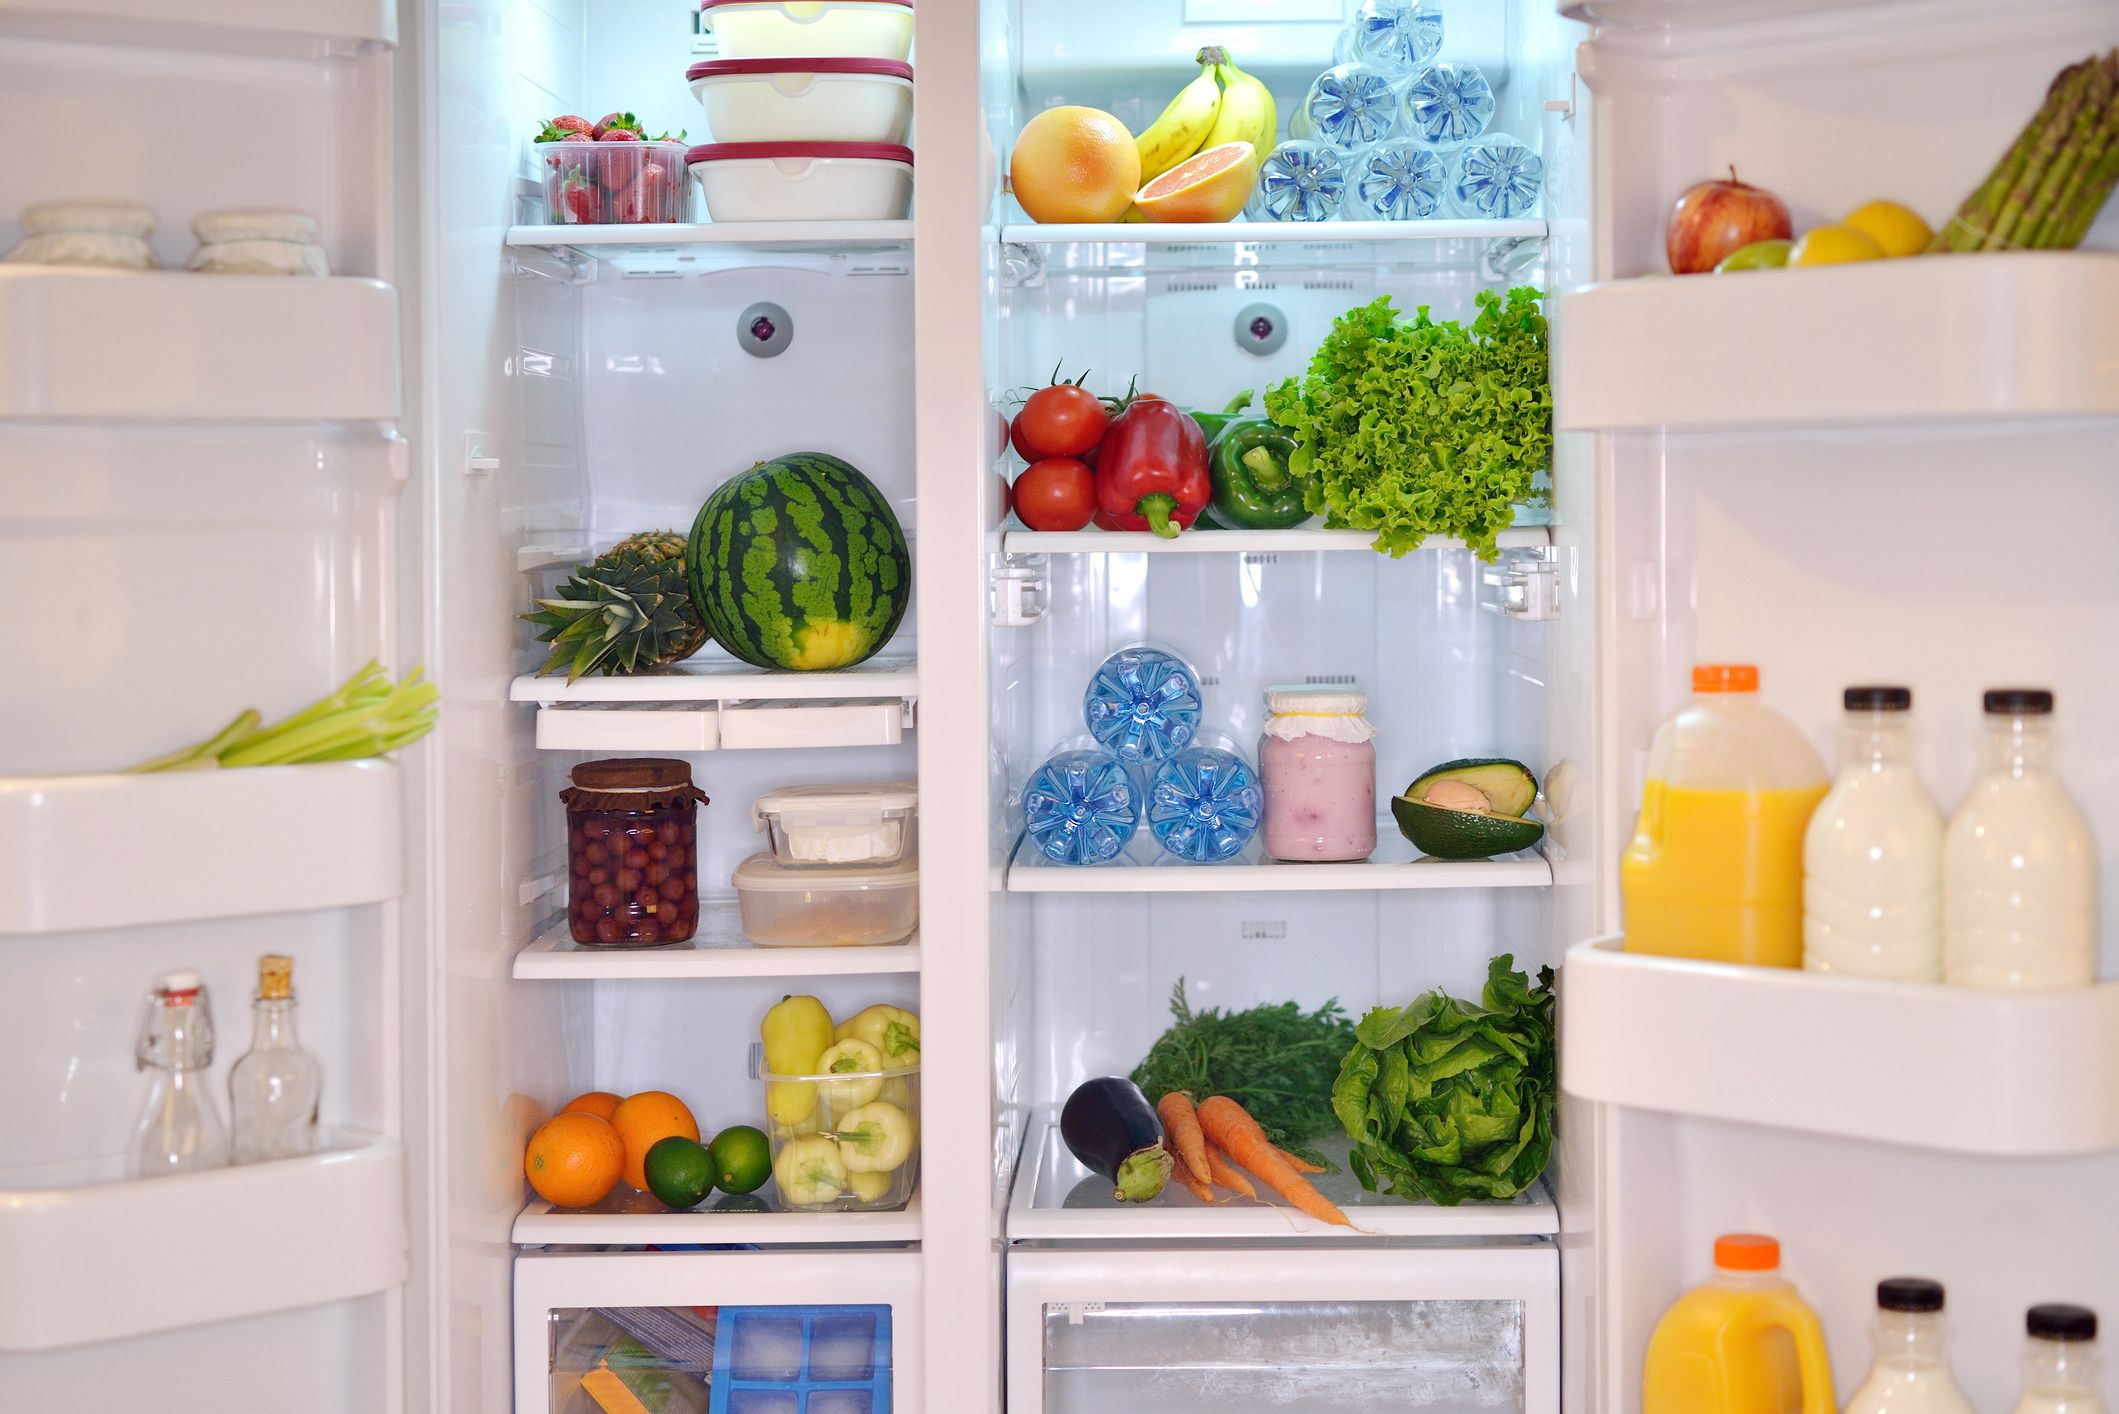 Fridge organisation - how to organise your fridge